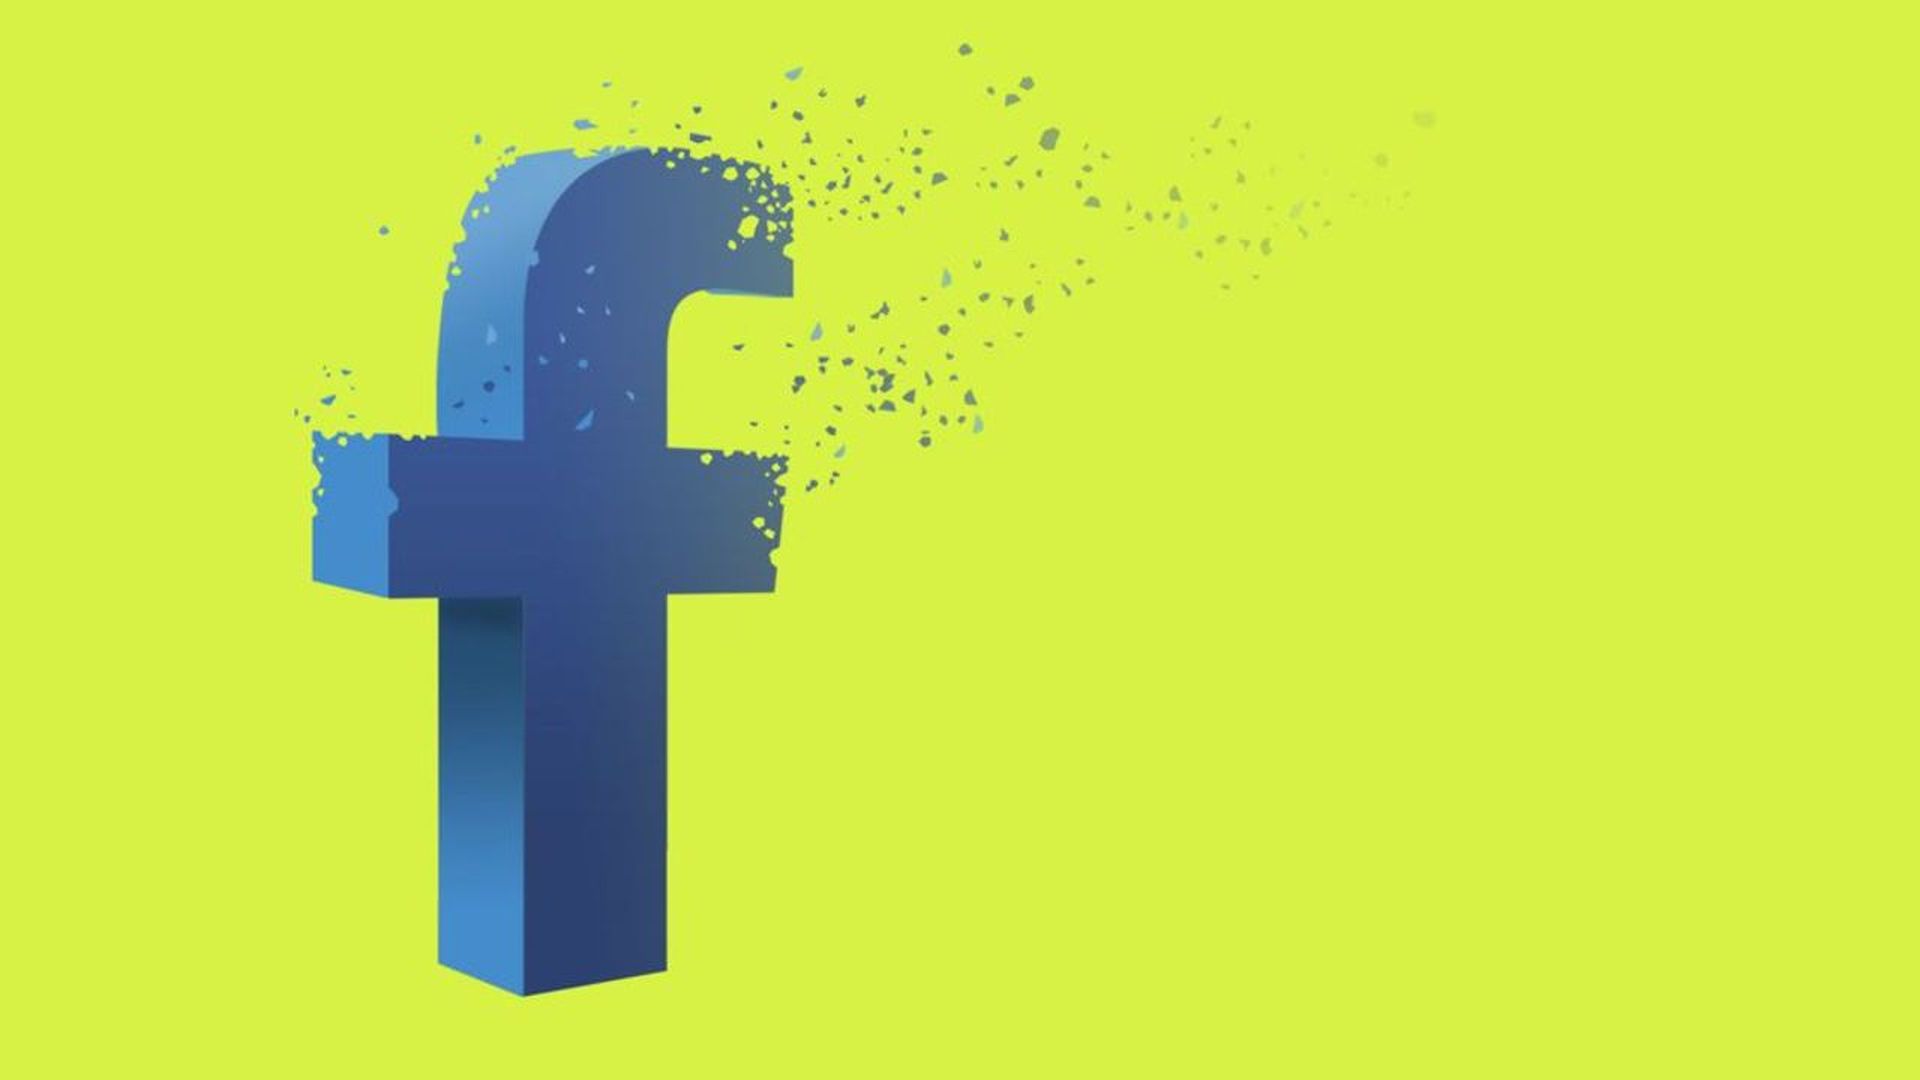 Illustration of the Facebook F logo deteriorating